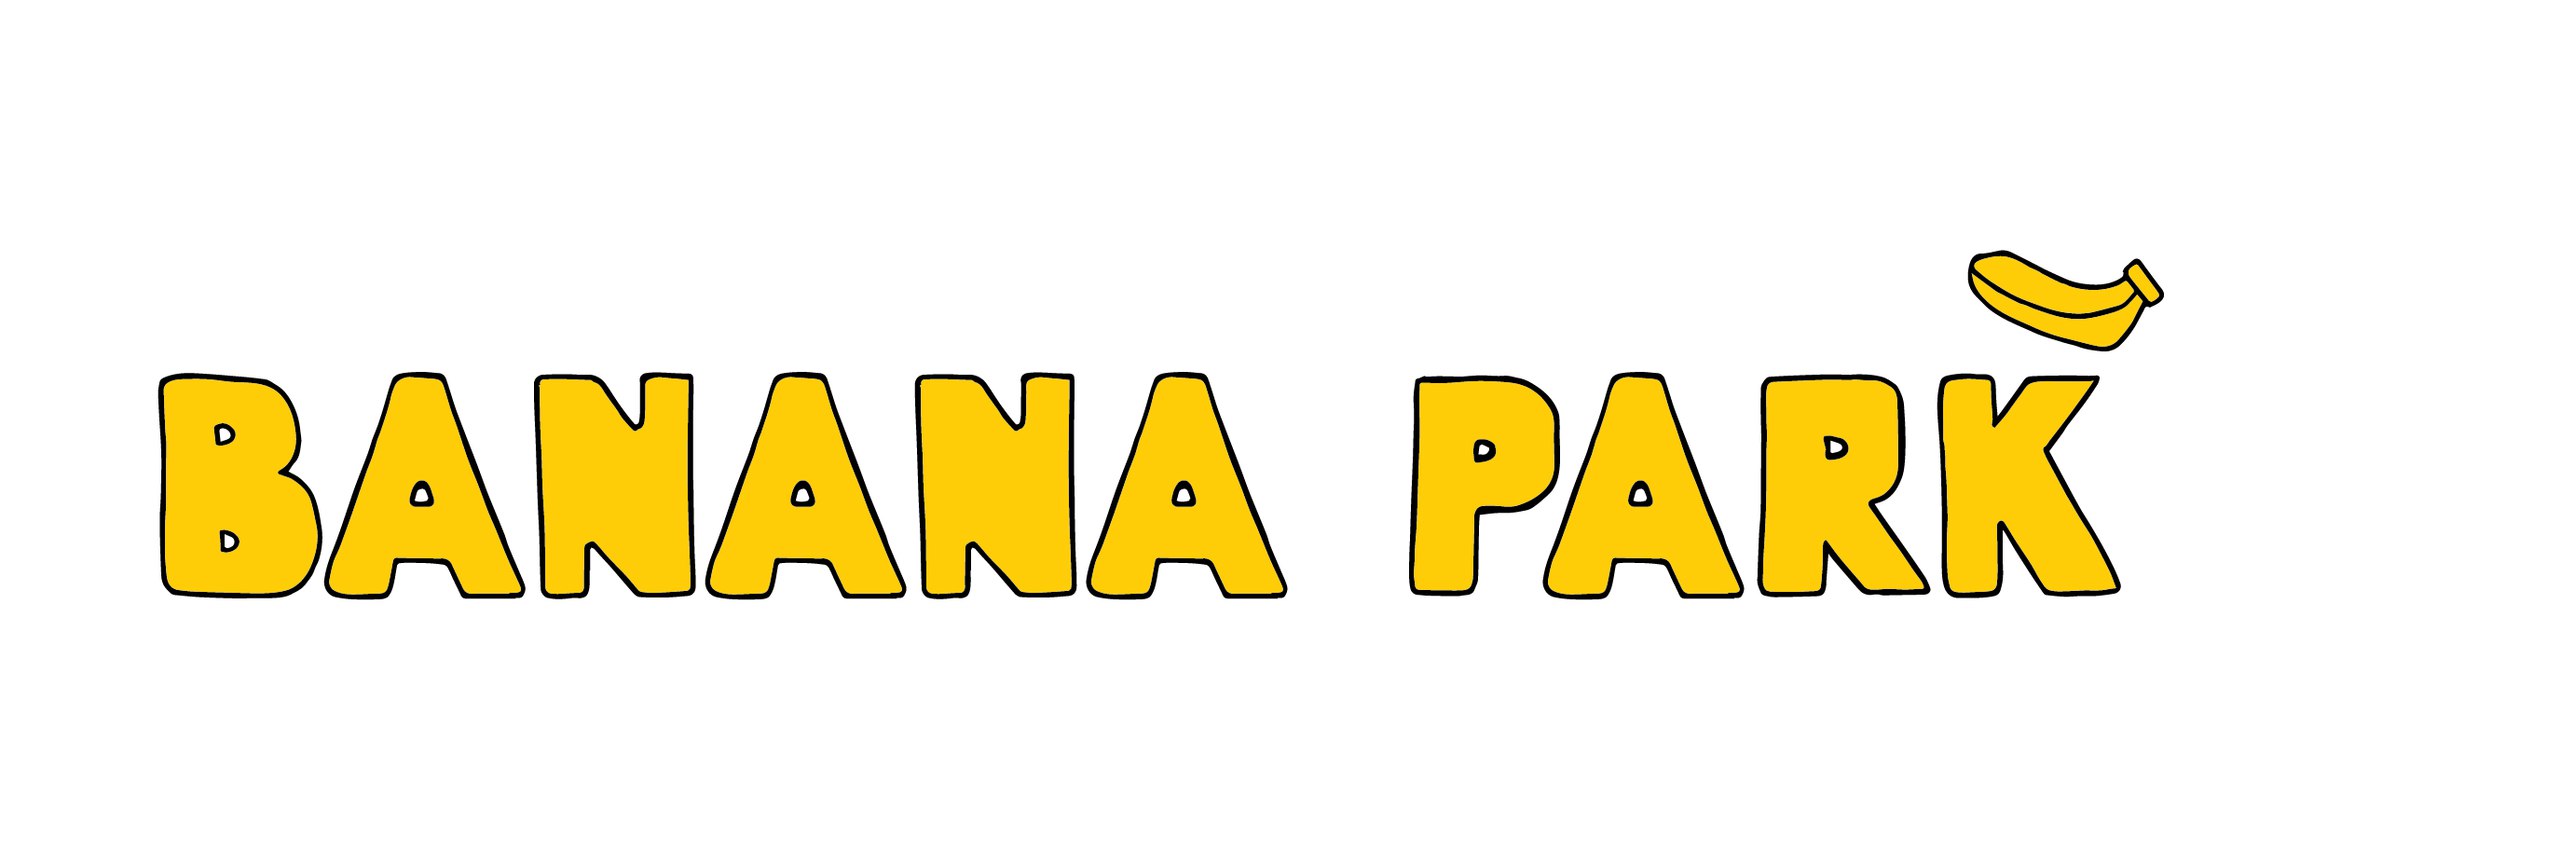 банана парк на мате залки